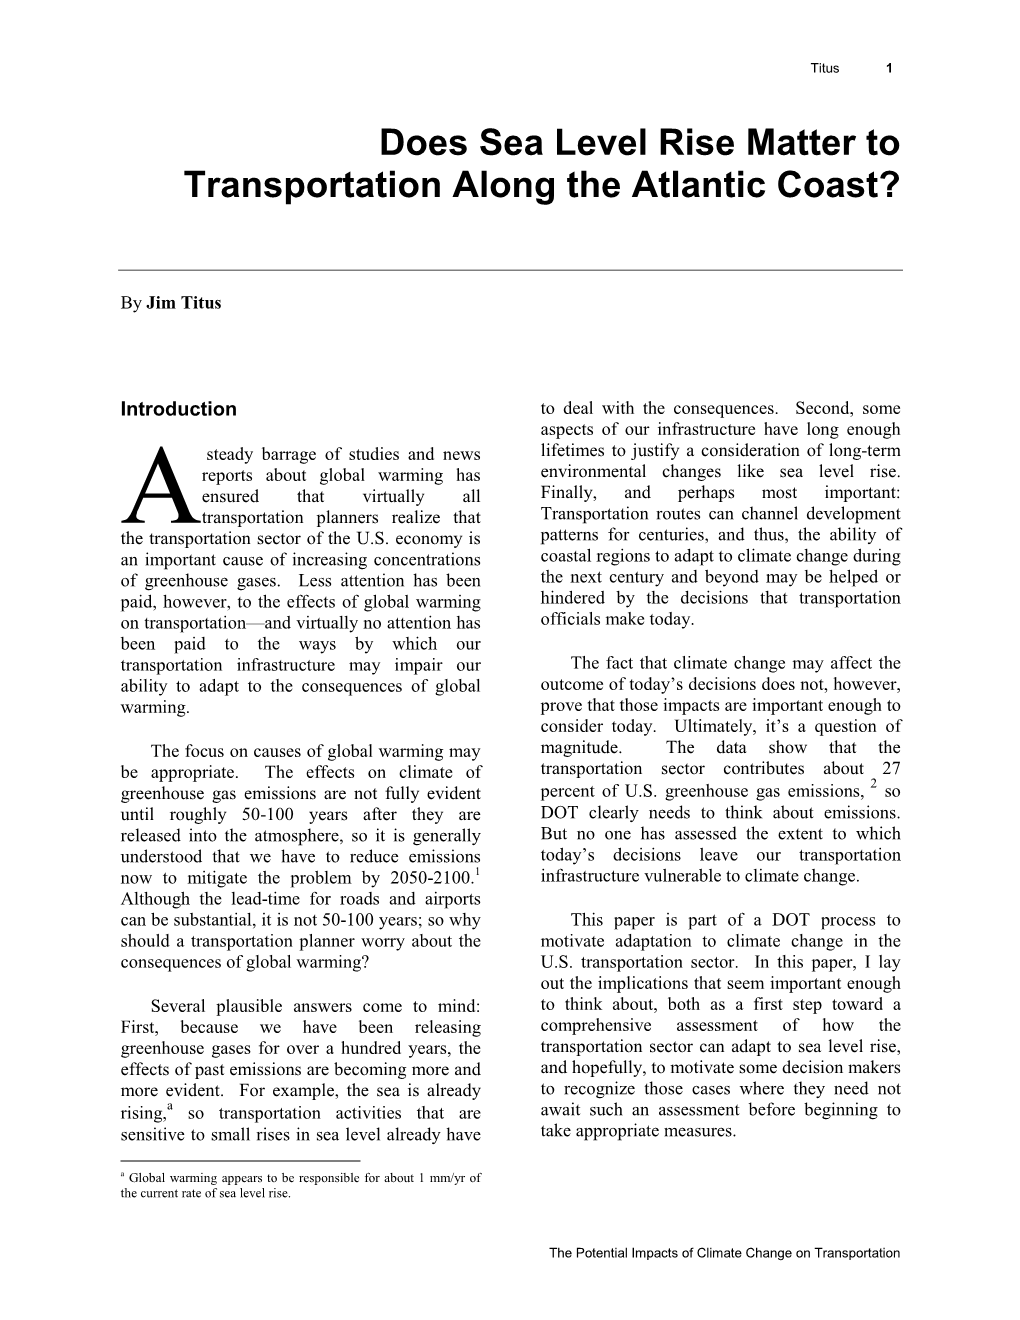 Does Sea Level Rise Matter to Transportation Along the Atlantic Coast?